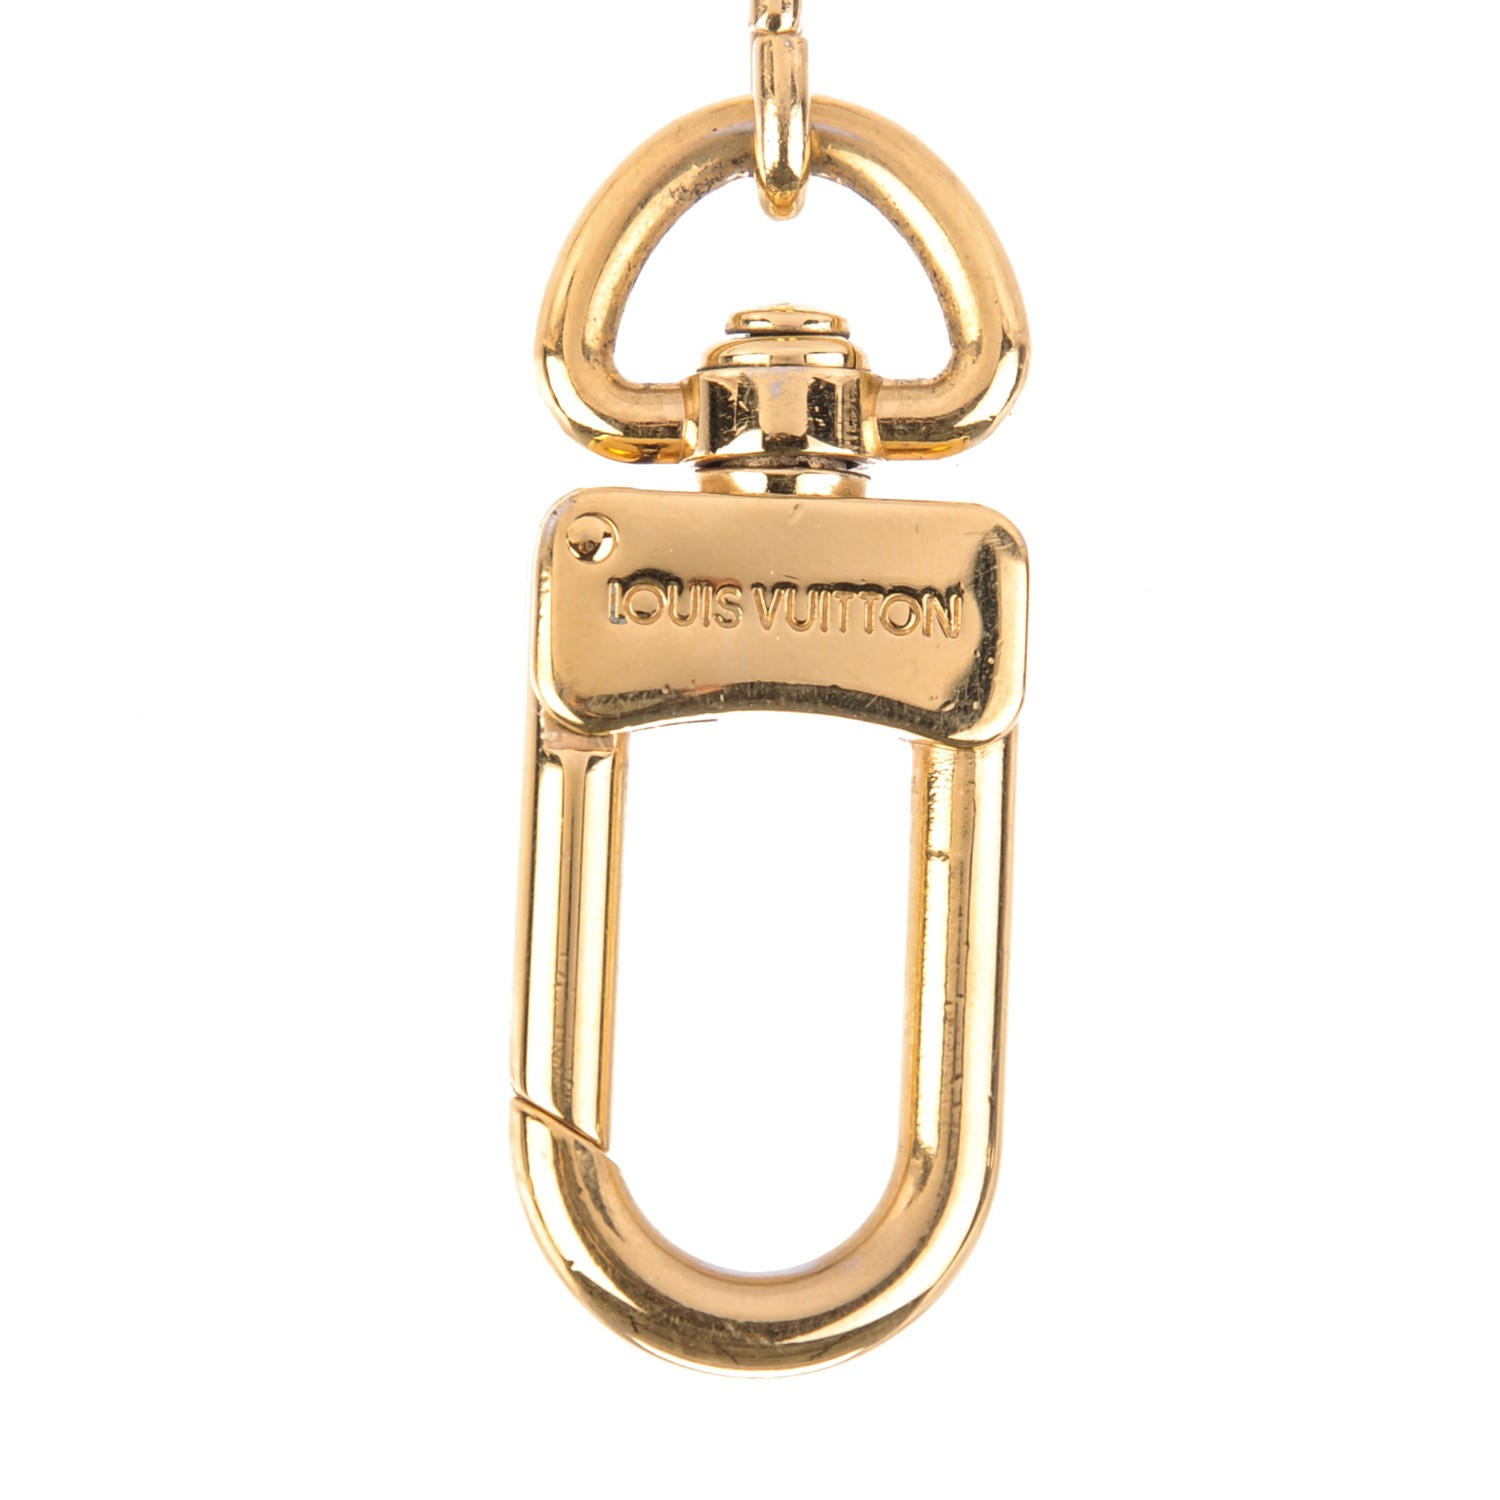 LOUIS VUITTON Pochette Extender Key Ring Gold 837470